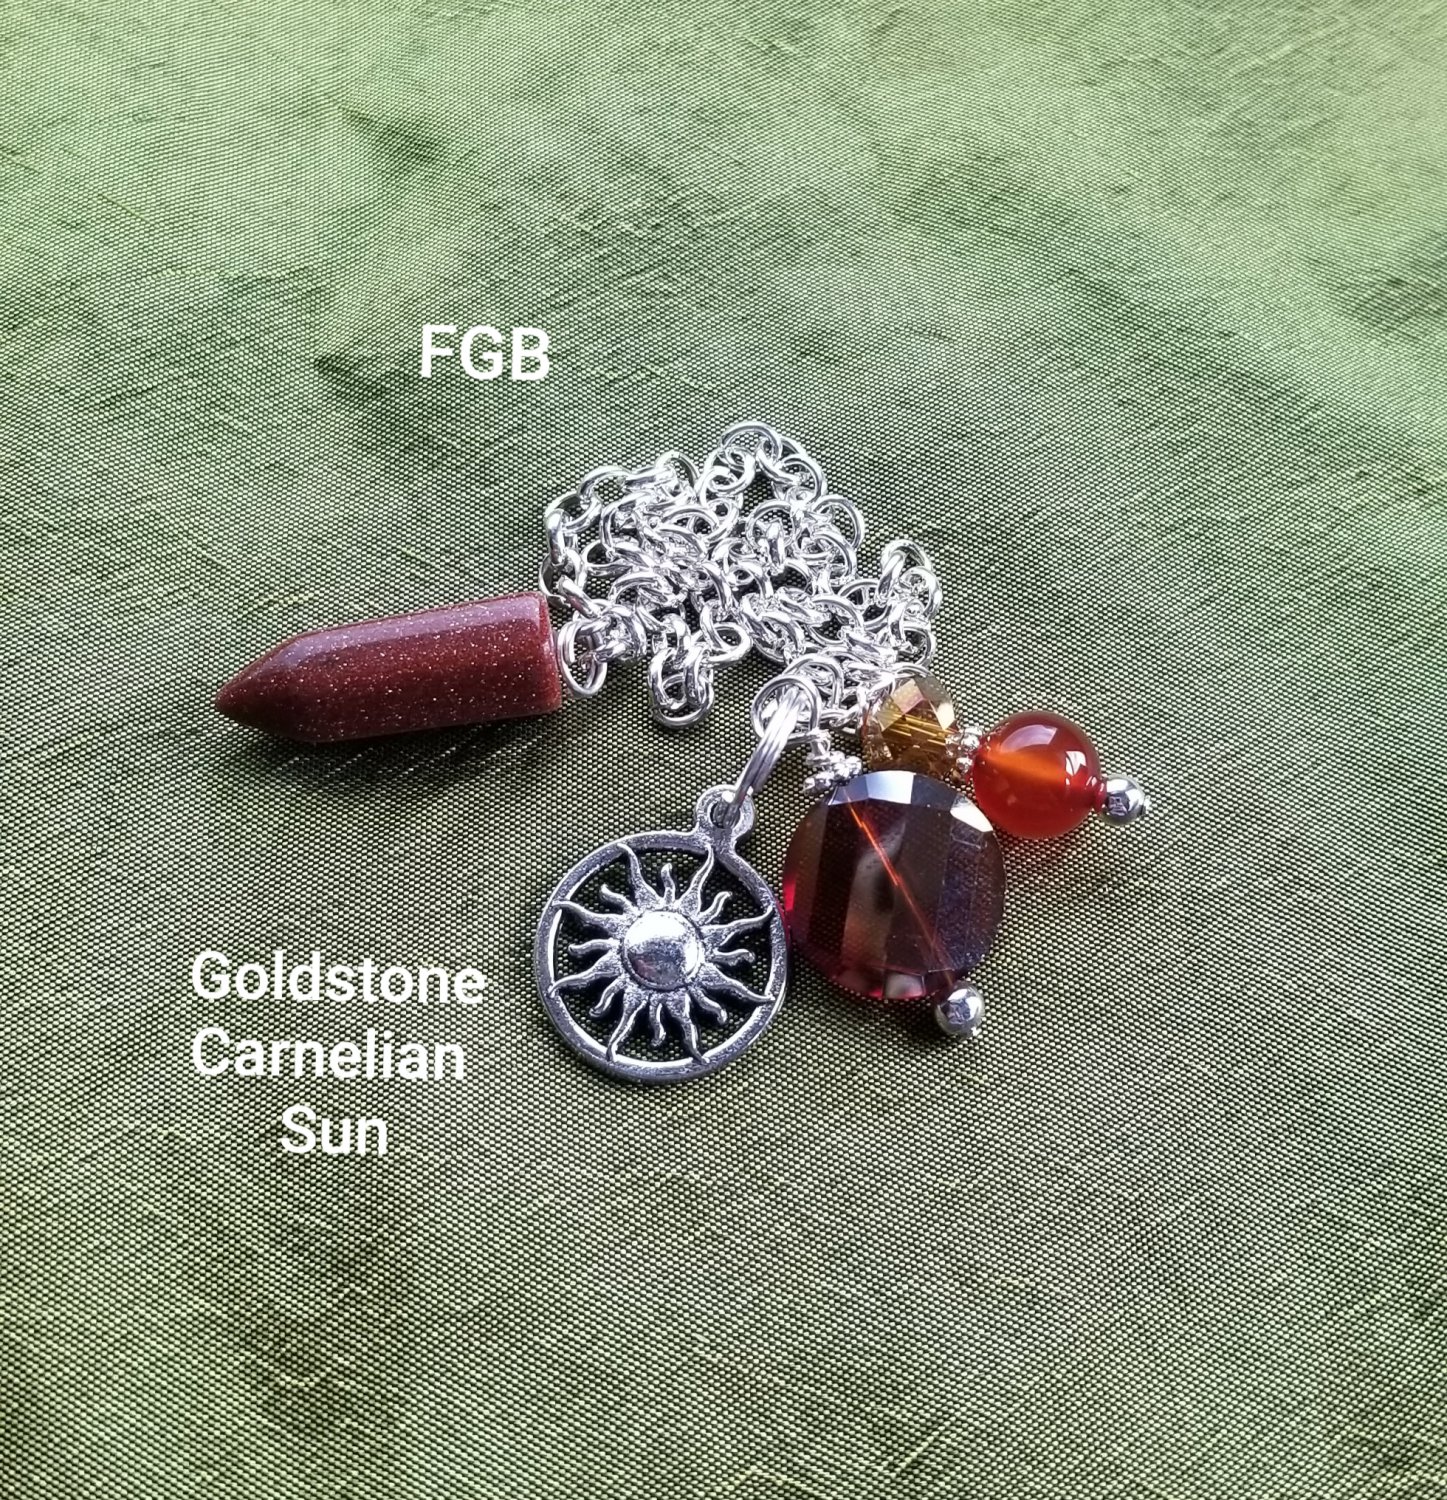 Goldstone sun pendulum 2b